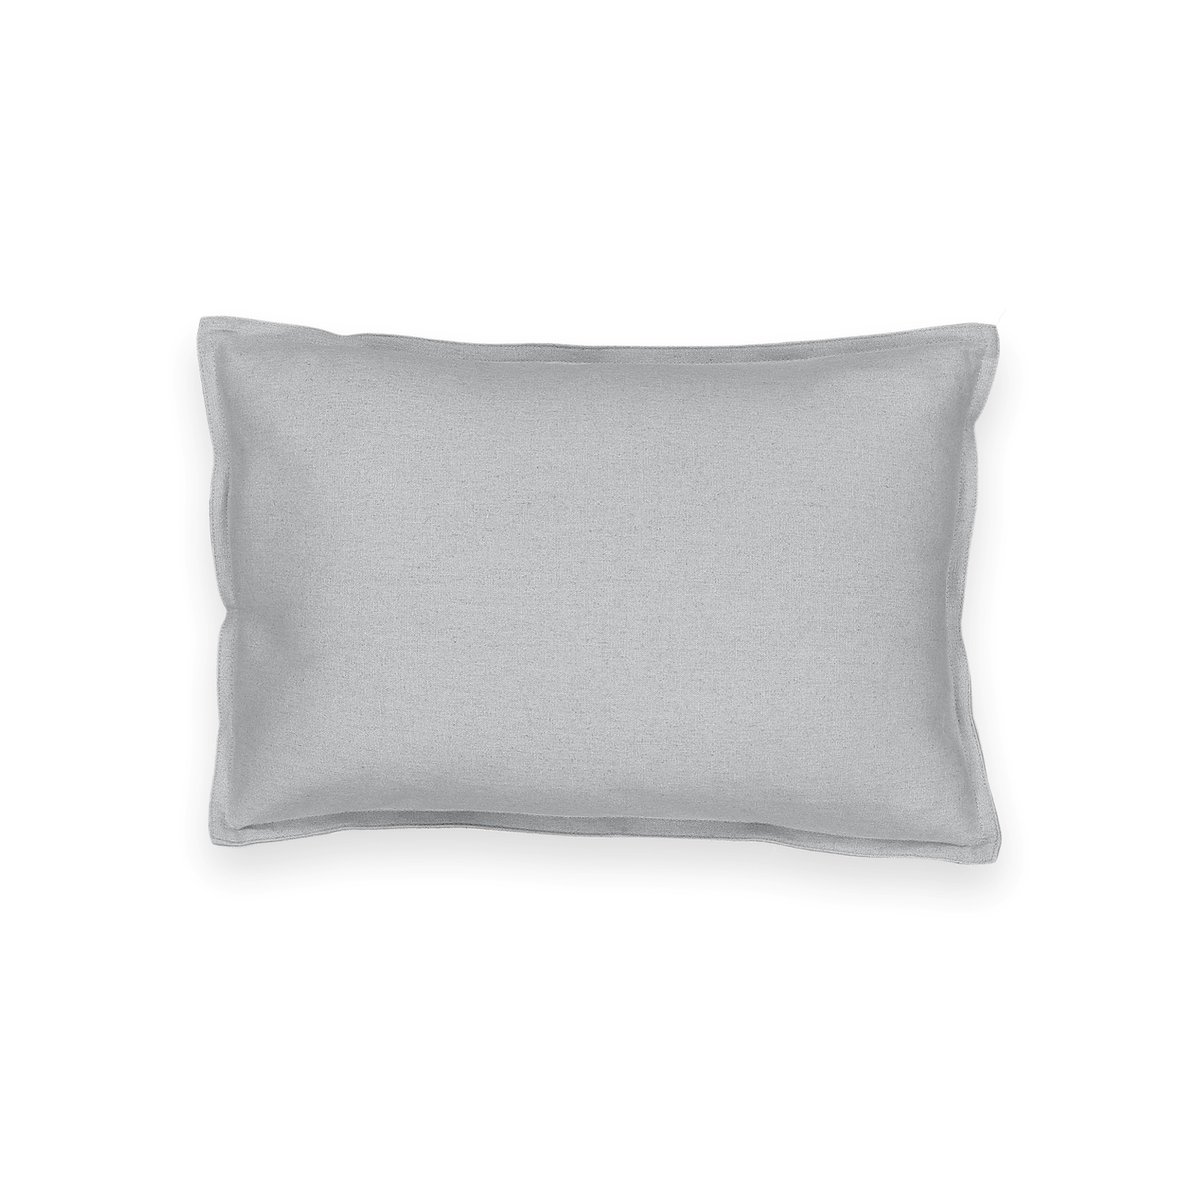 Чехол La Redoute Для подушки из льна и хлопка TAIMA 60 x 40 см серый, размер 60 x 40 см - фото 1